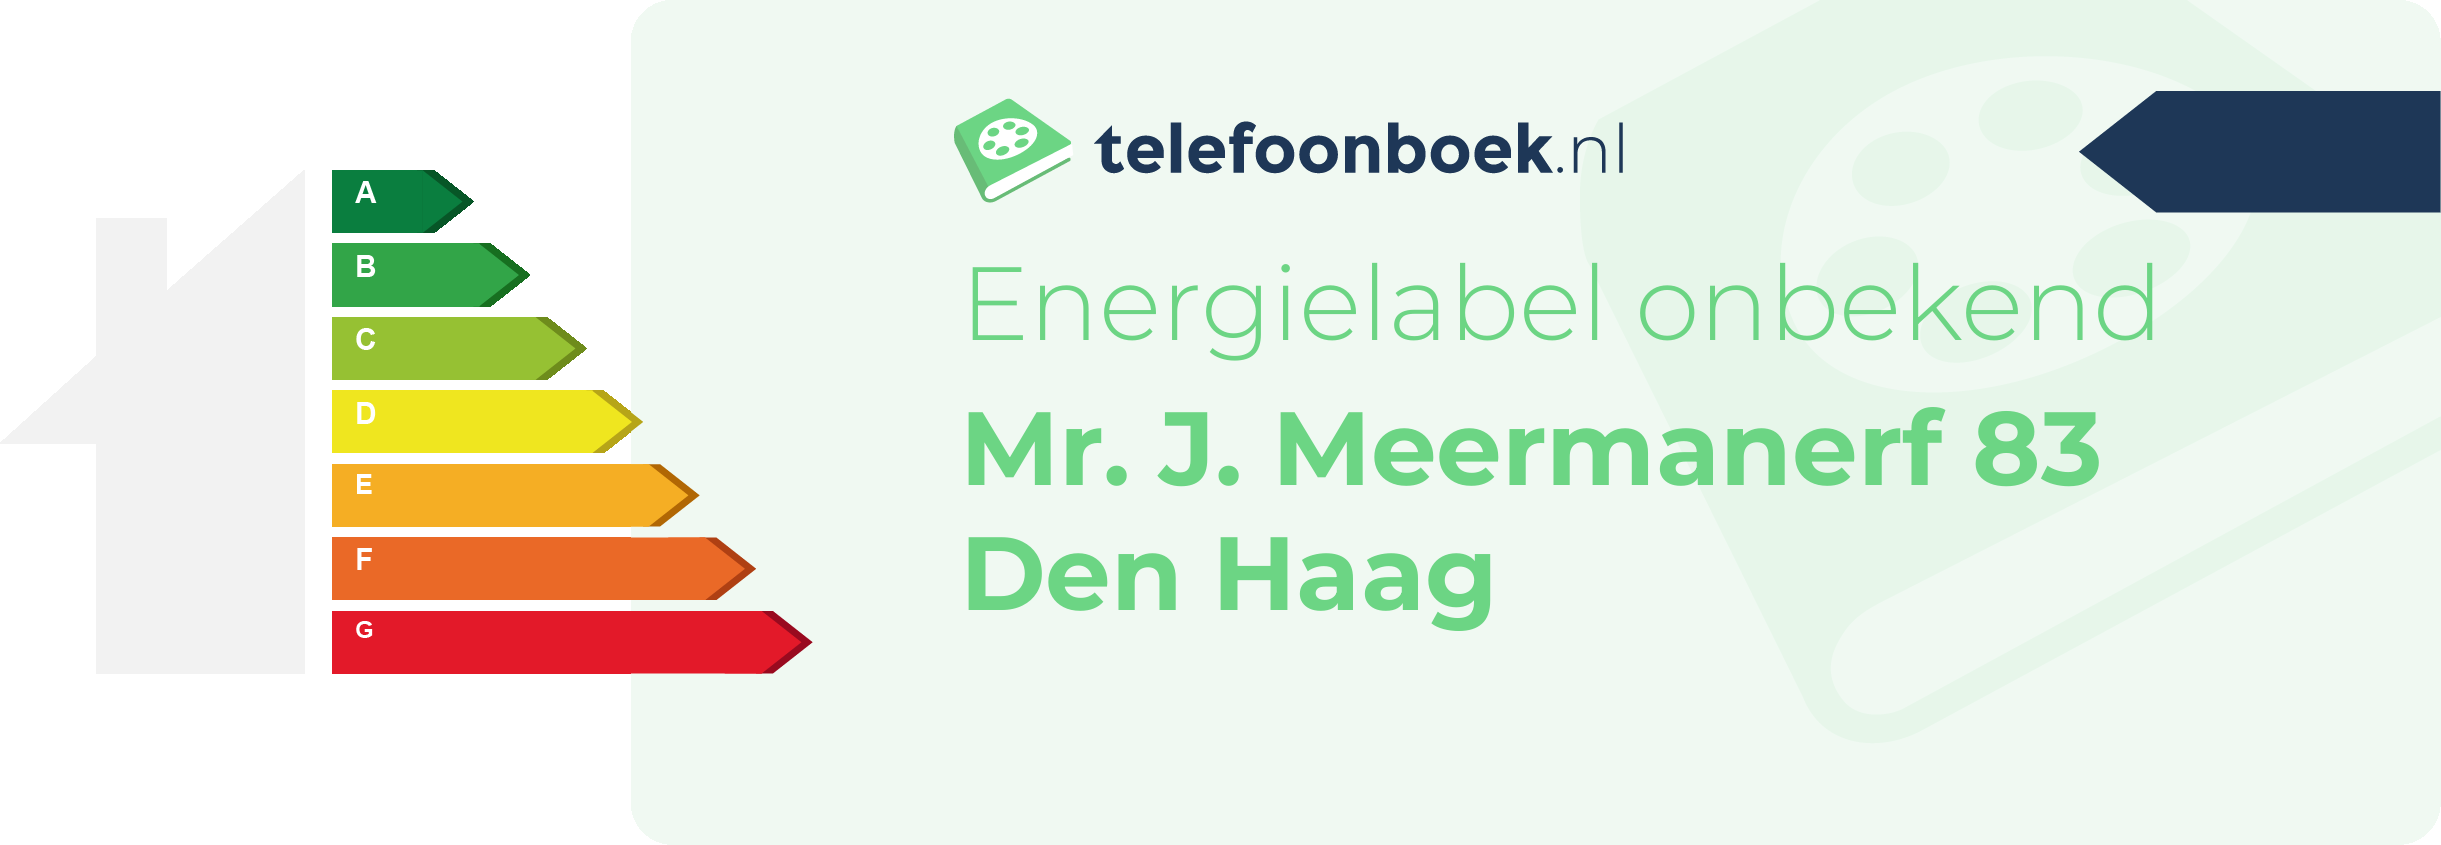 Energielabel Mr. J. Meermanerf 83 Den Haag